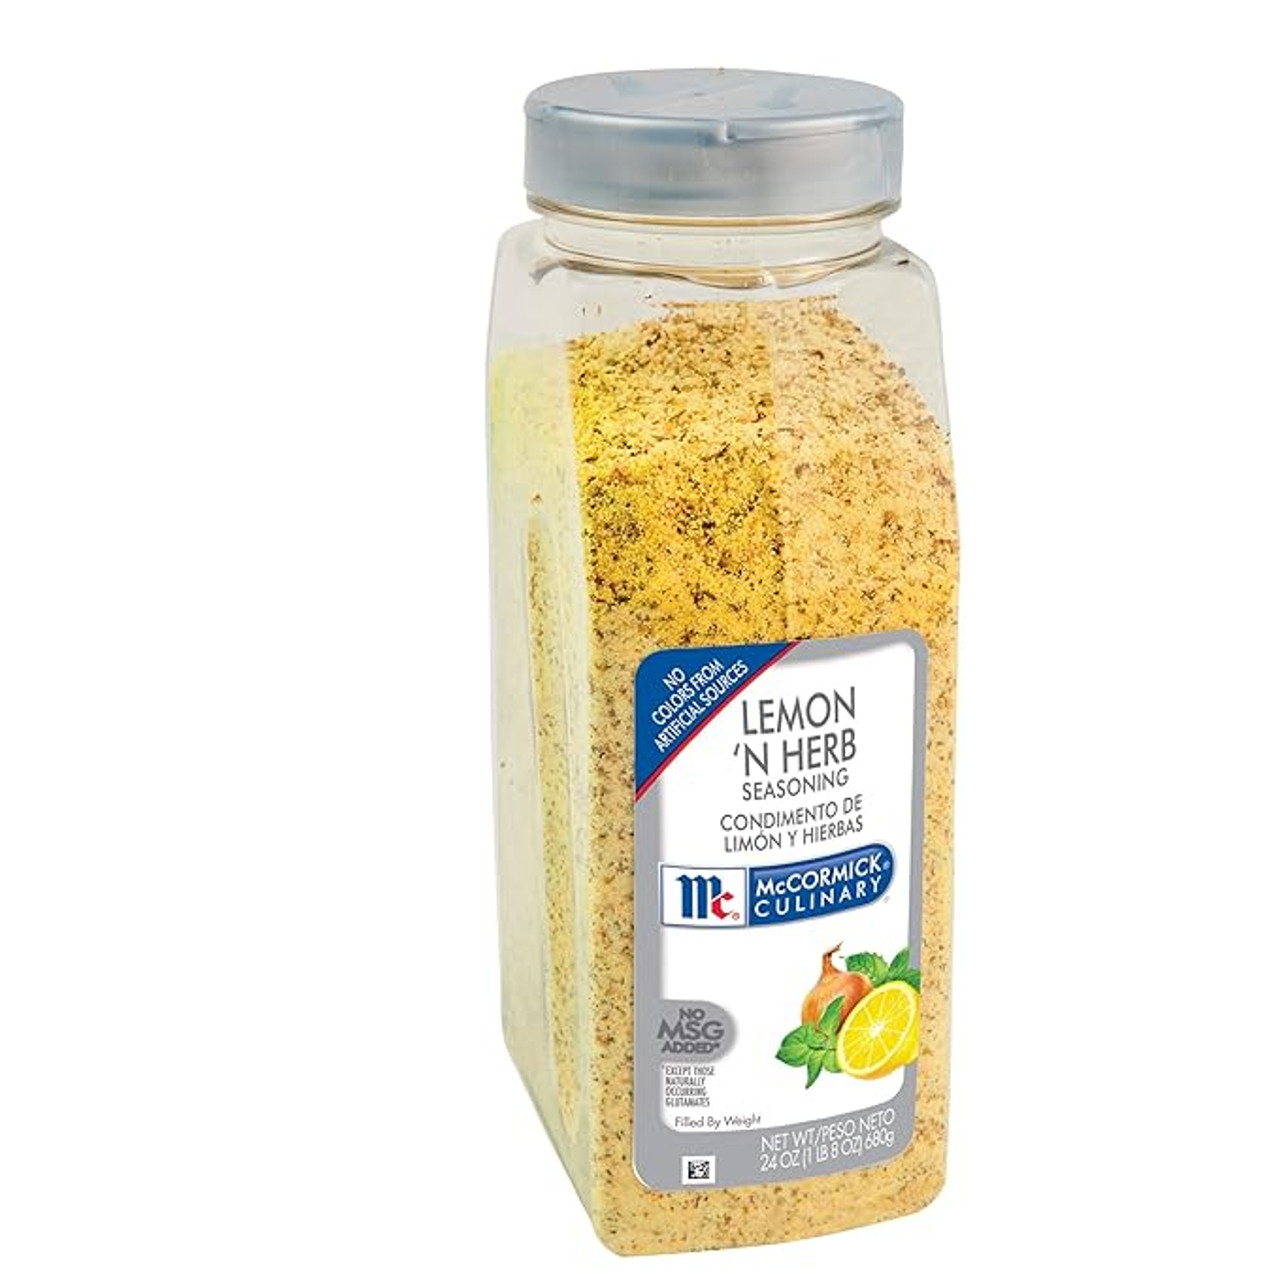 McCormick Culinary Lemon 'N Herb Seasoning, 24 oz. - 6/Case Fresh Citrus Flavor - Chicken Pieces